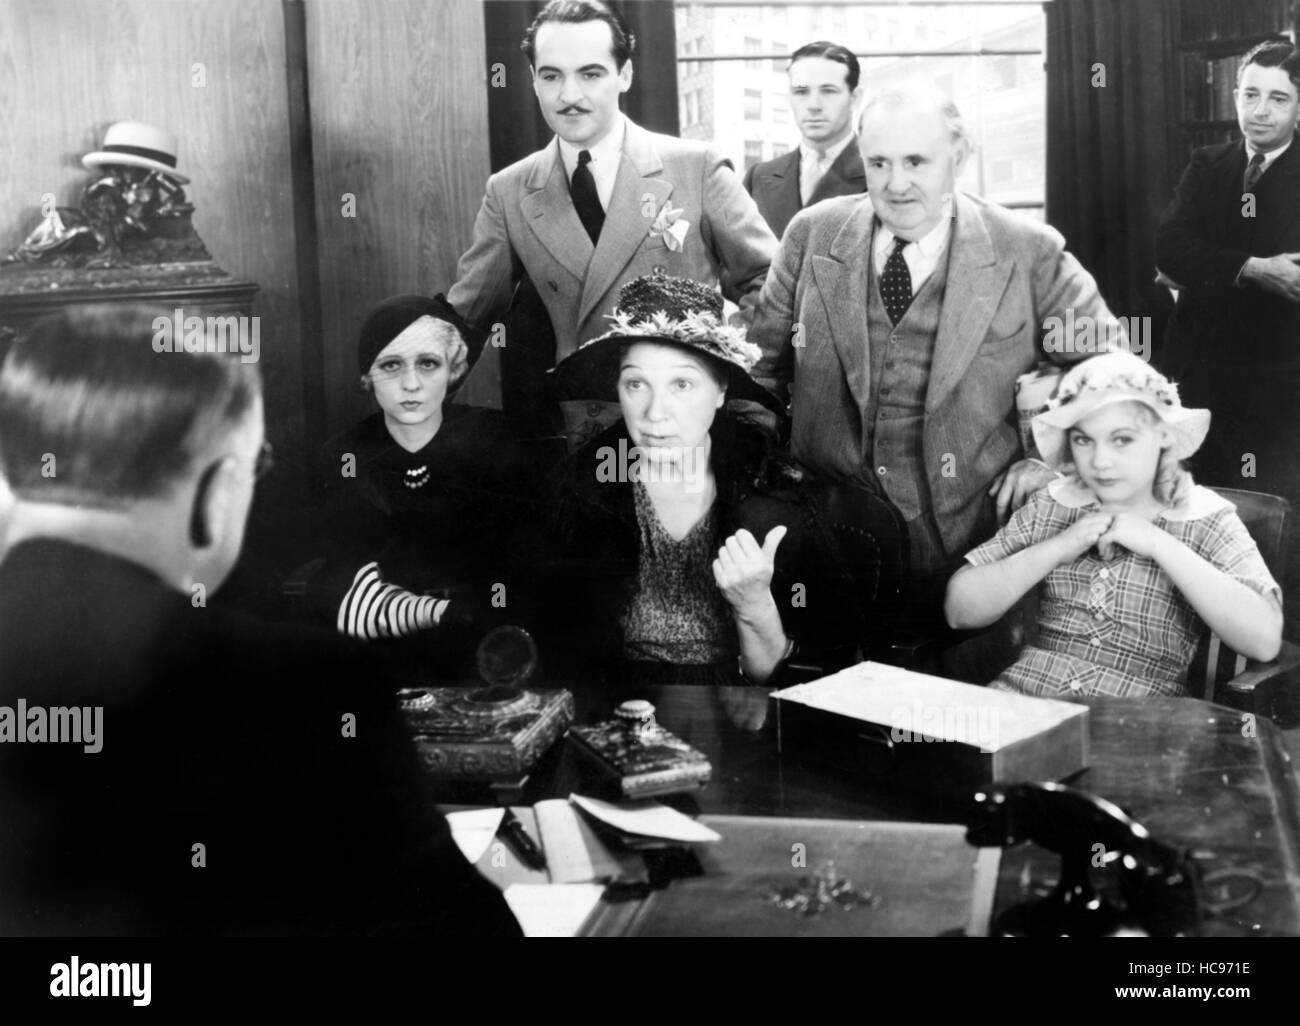 WOMEN WON'T TELL, seated l-r: Mae Busch, Sarah Padden, Gloria Shea, standing right: Otis Harlan, 1932 Stock Photo